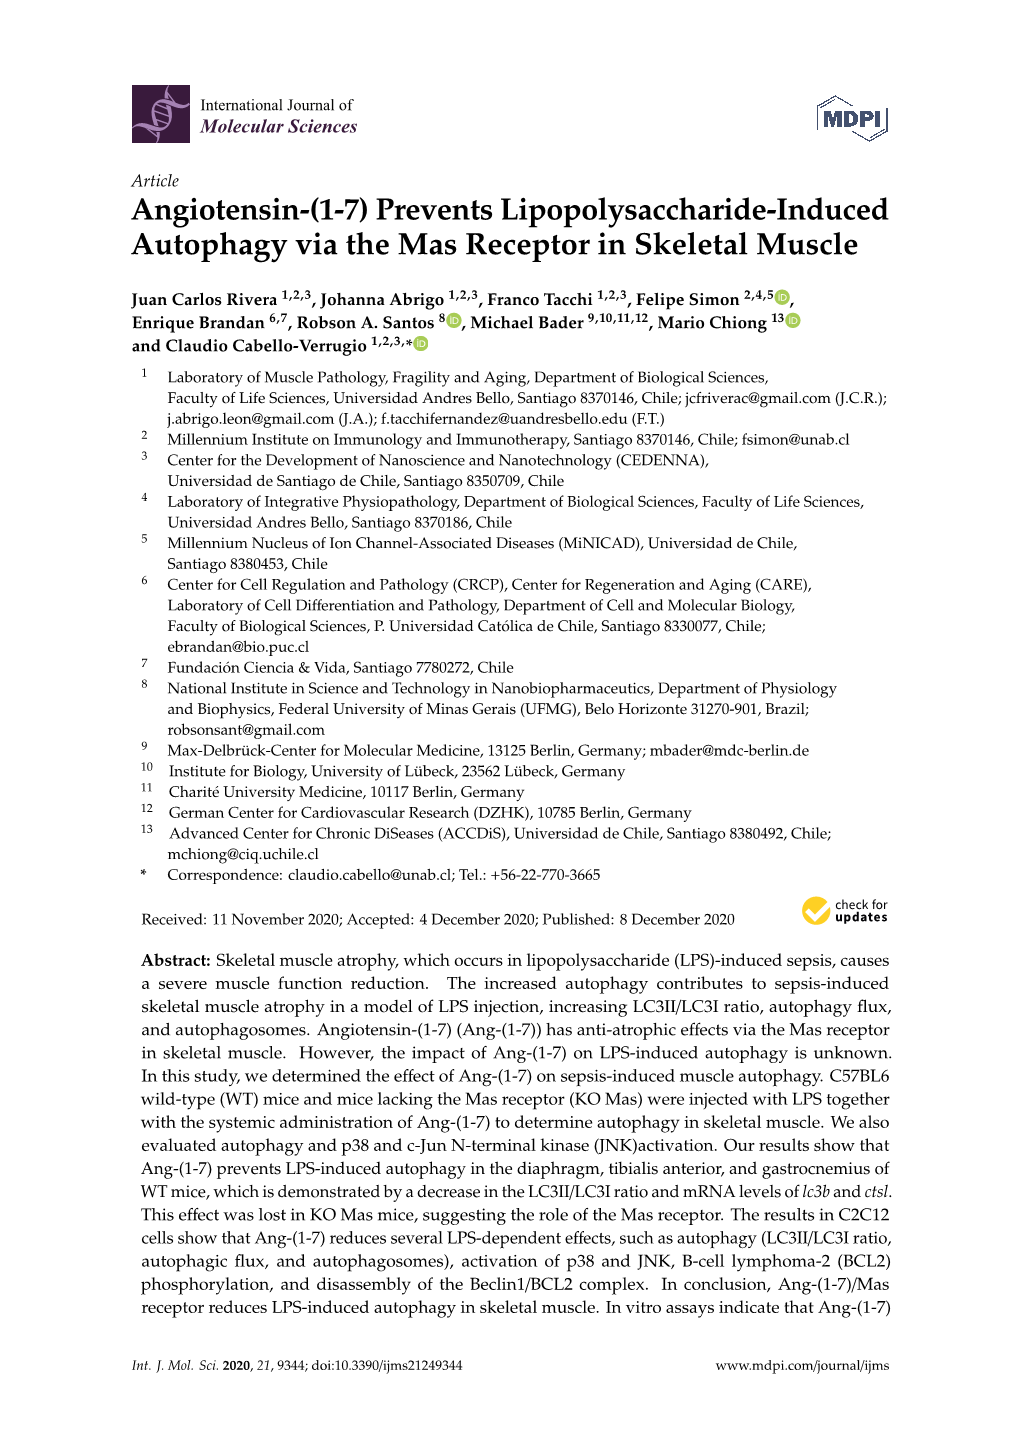 Angiotensin-(1-7) Prevents Lipopolysaccharide-Induced Autophagy Via the Mas Receptor in Skeletal Muscle